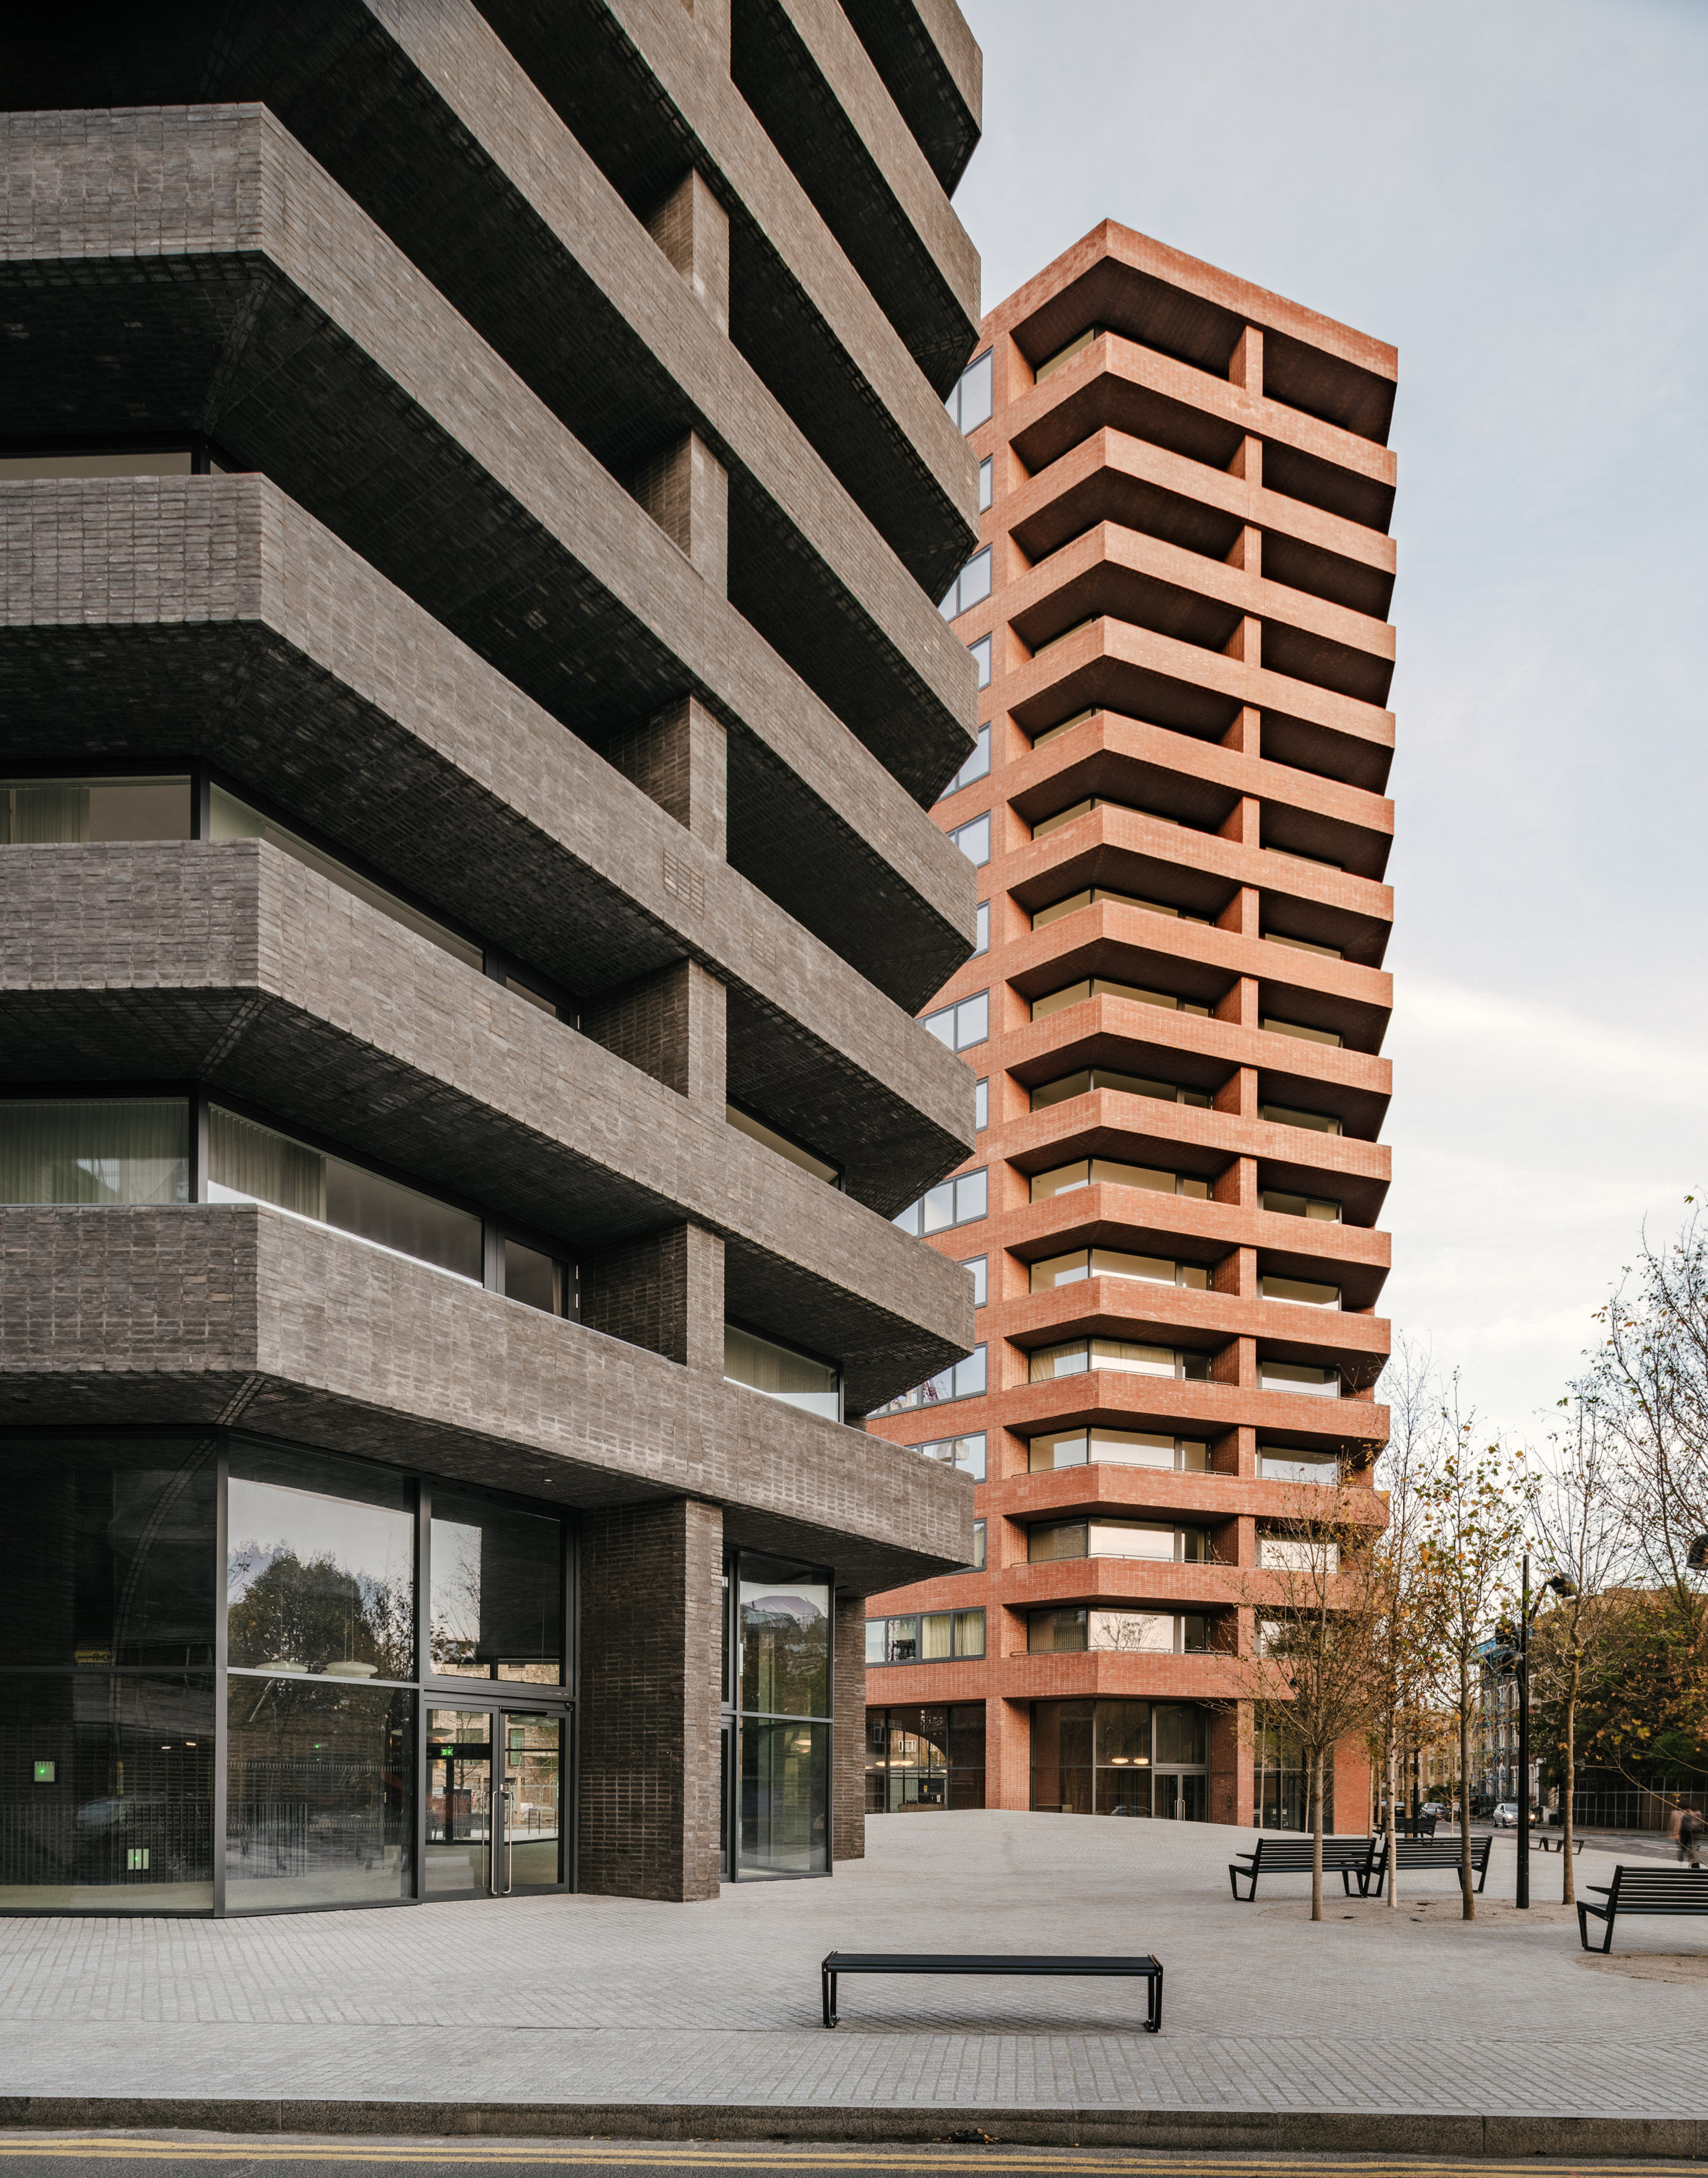 Hoxton Press by David Chipperfield Architects and Karakusevic Carson Architects